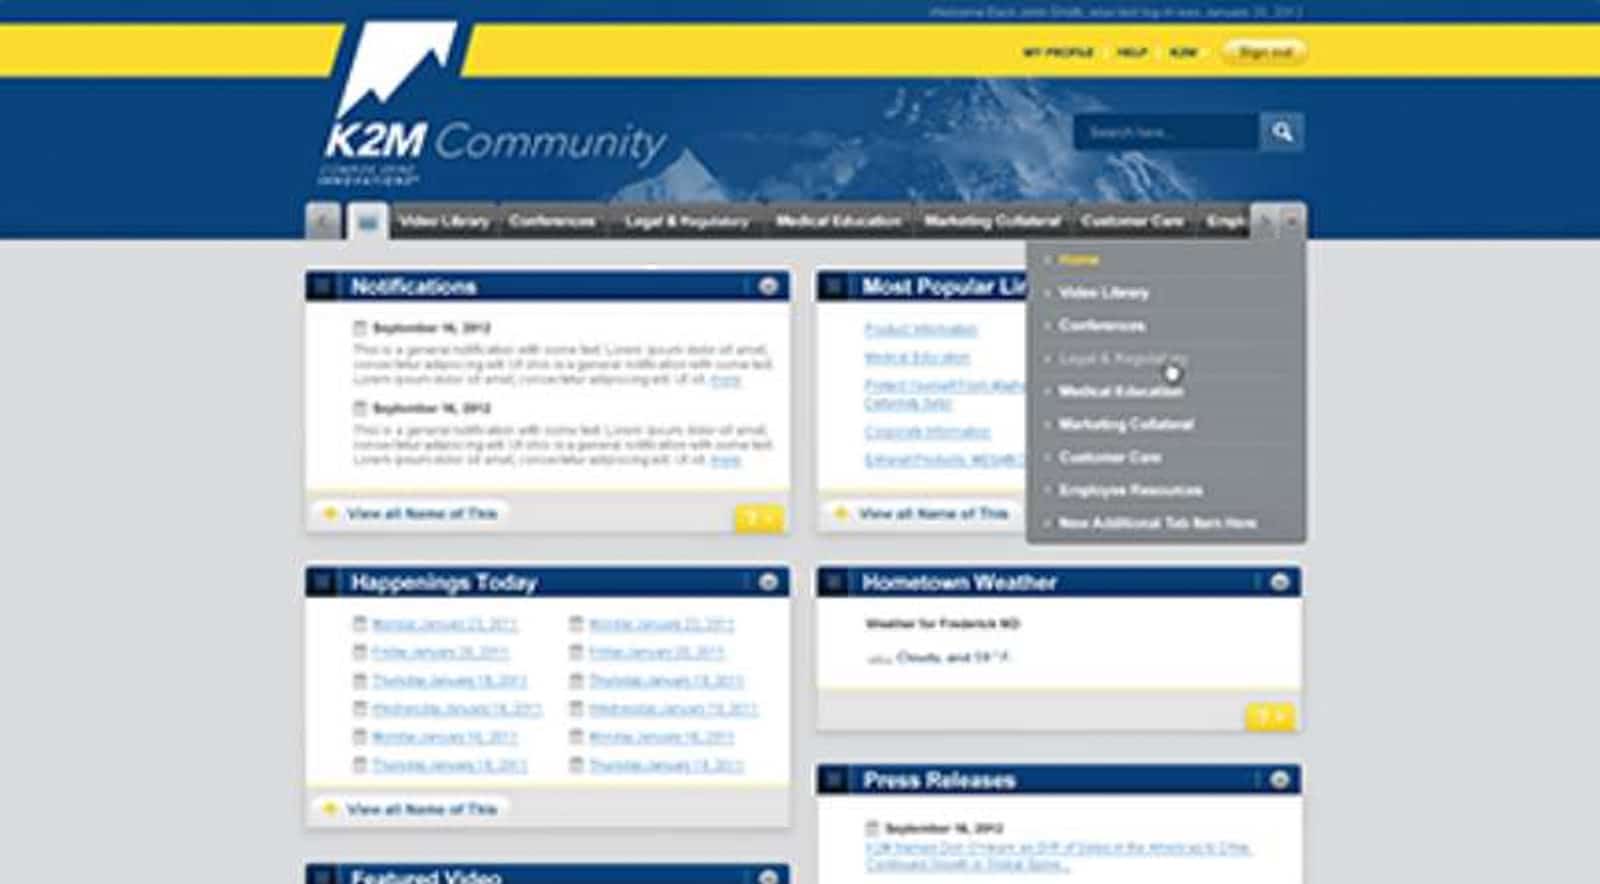 K2M website